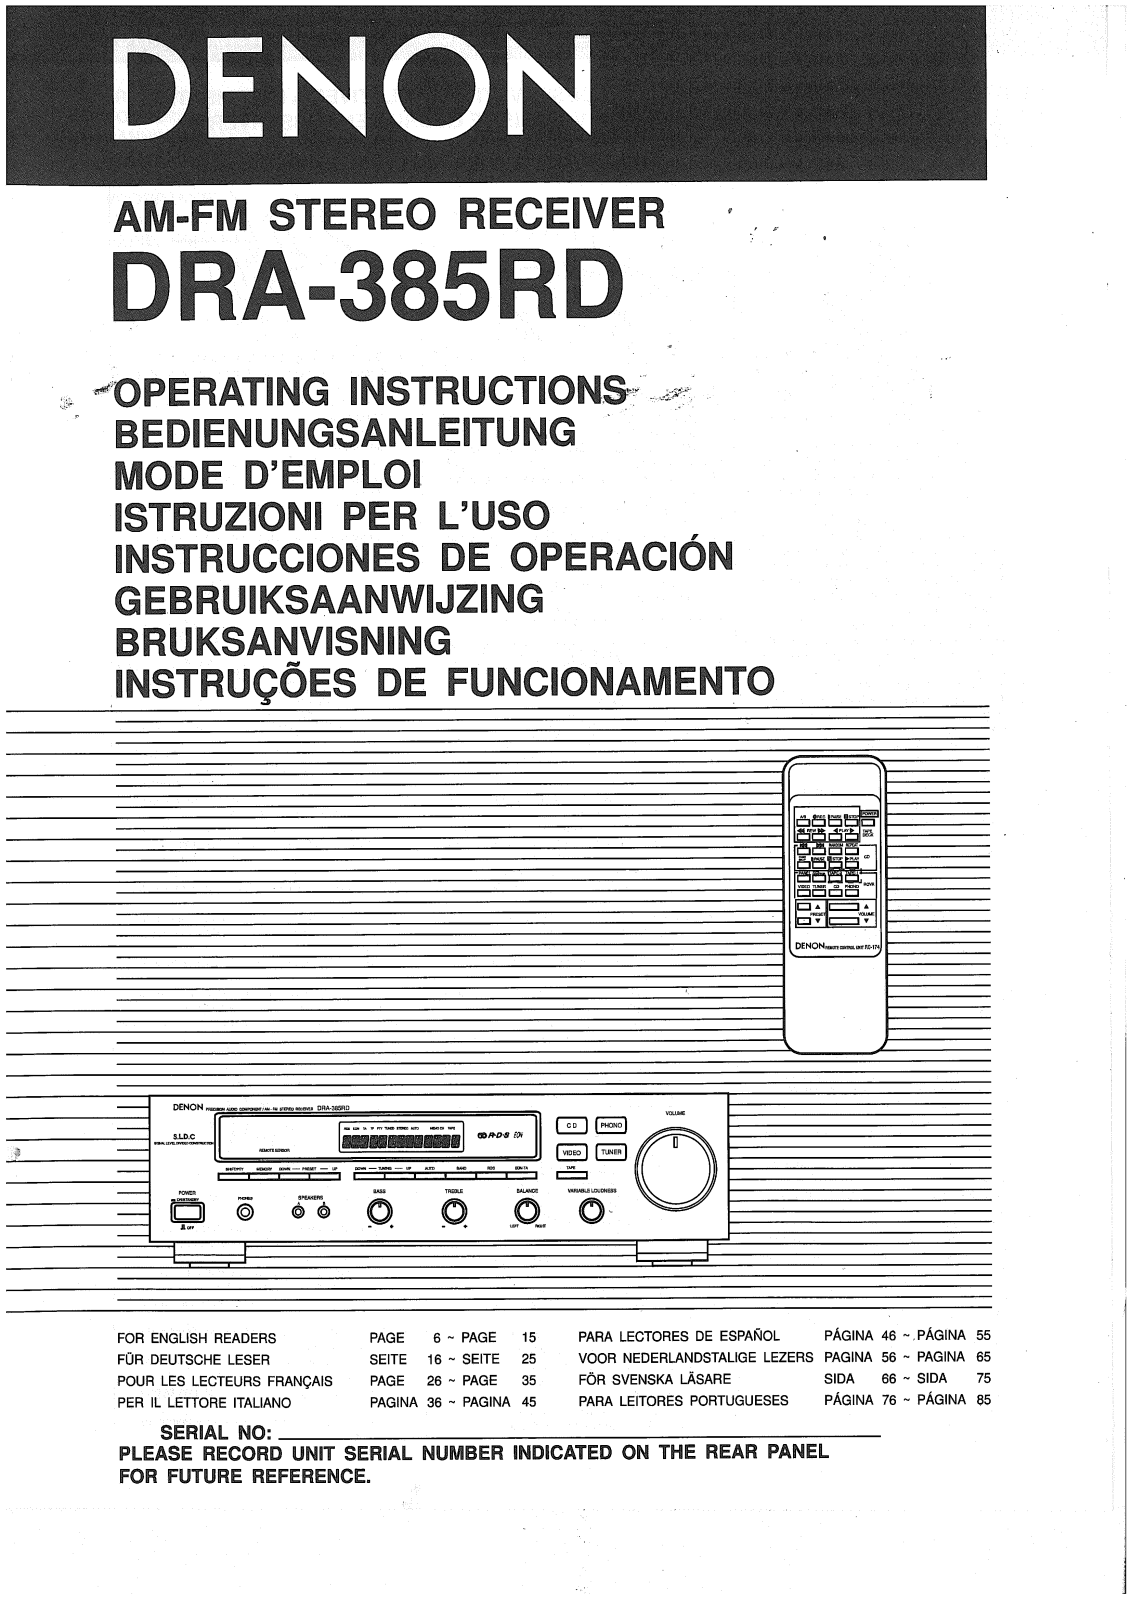 Denon DRA-385RD Owner's Manual